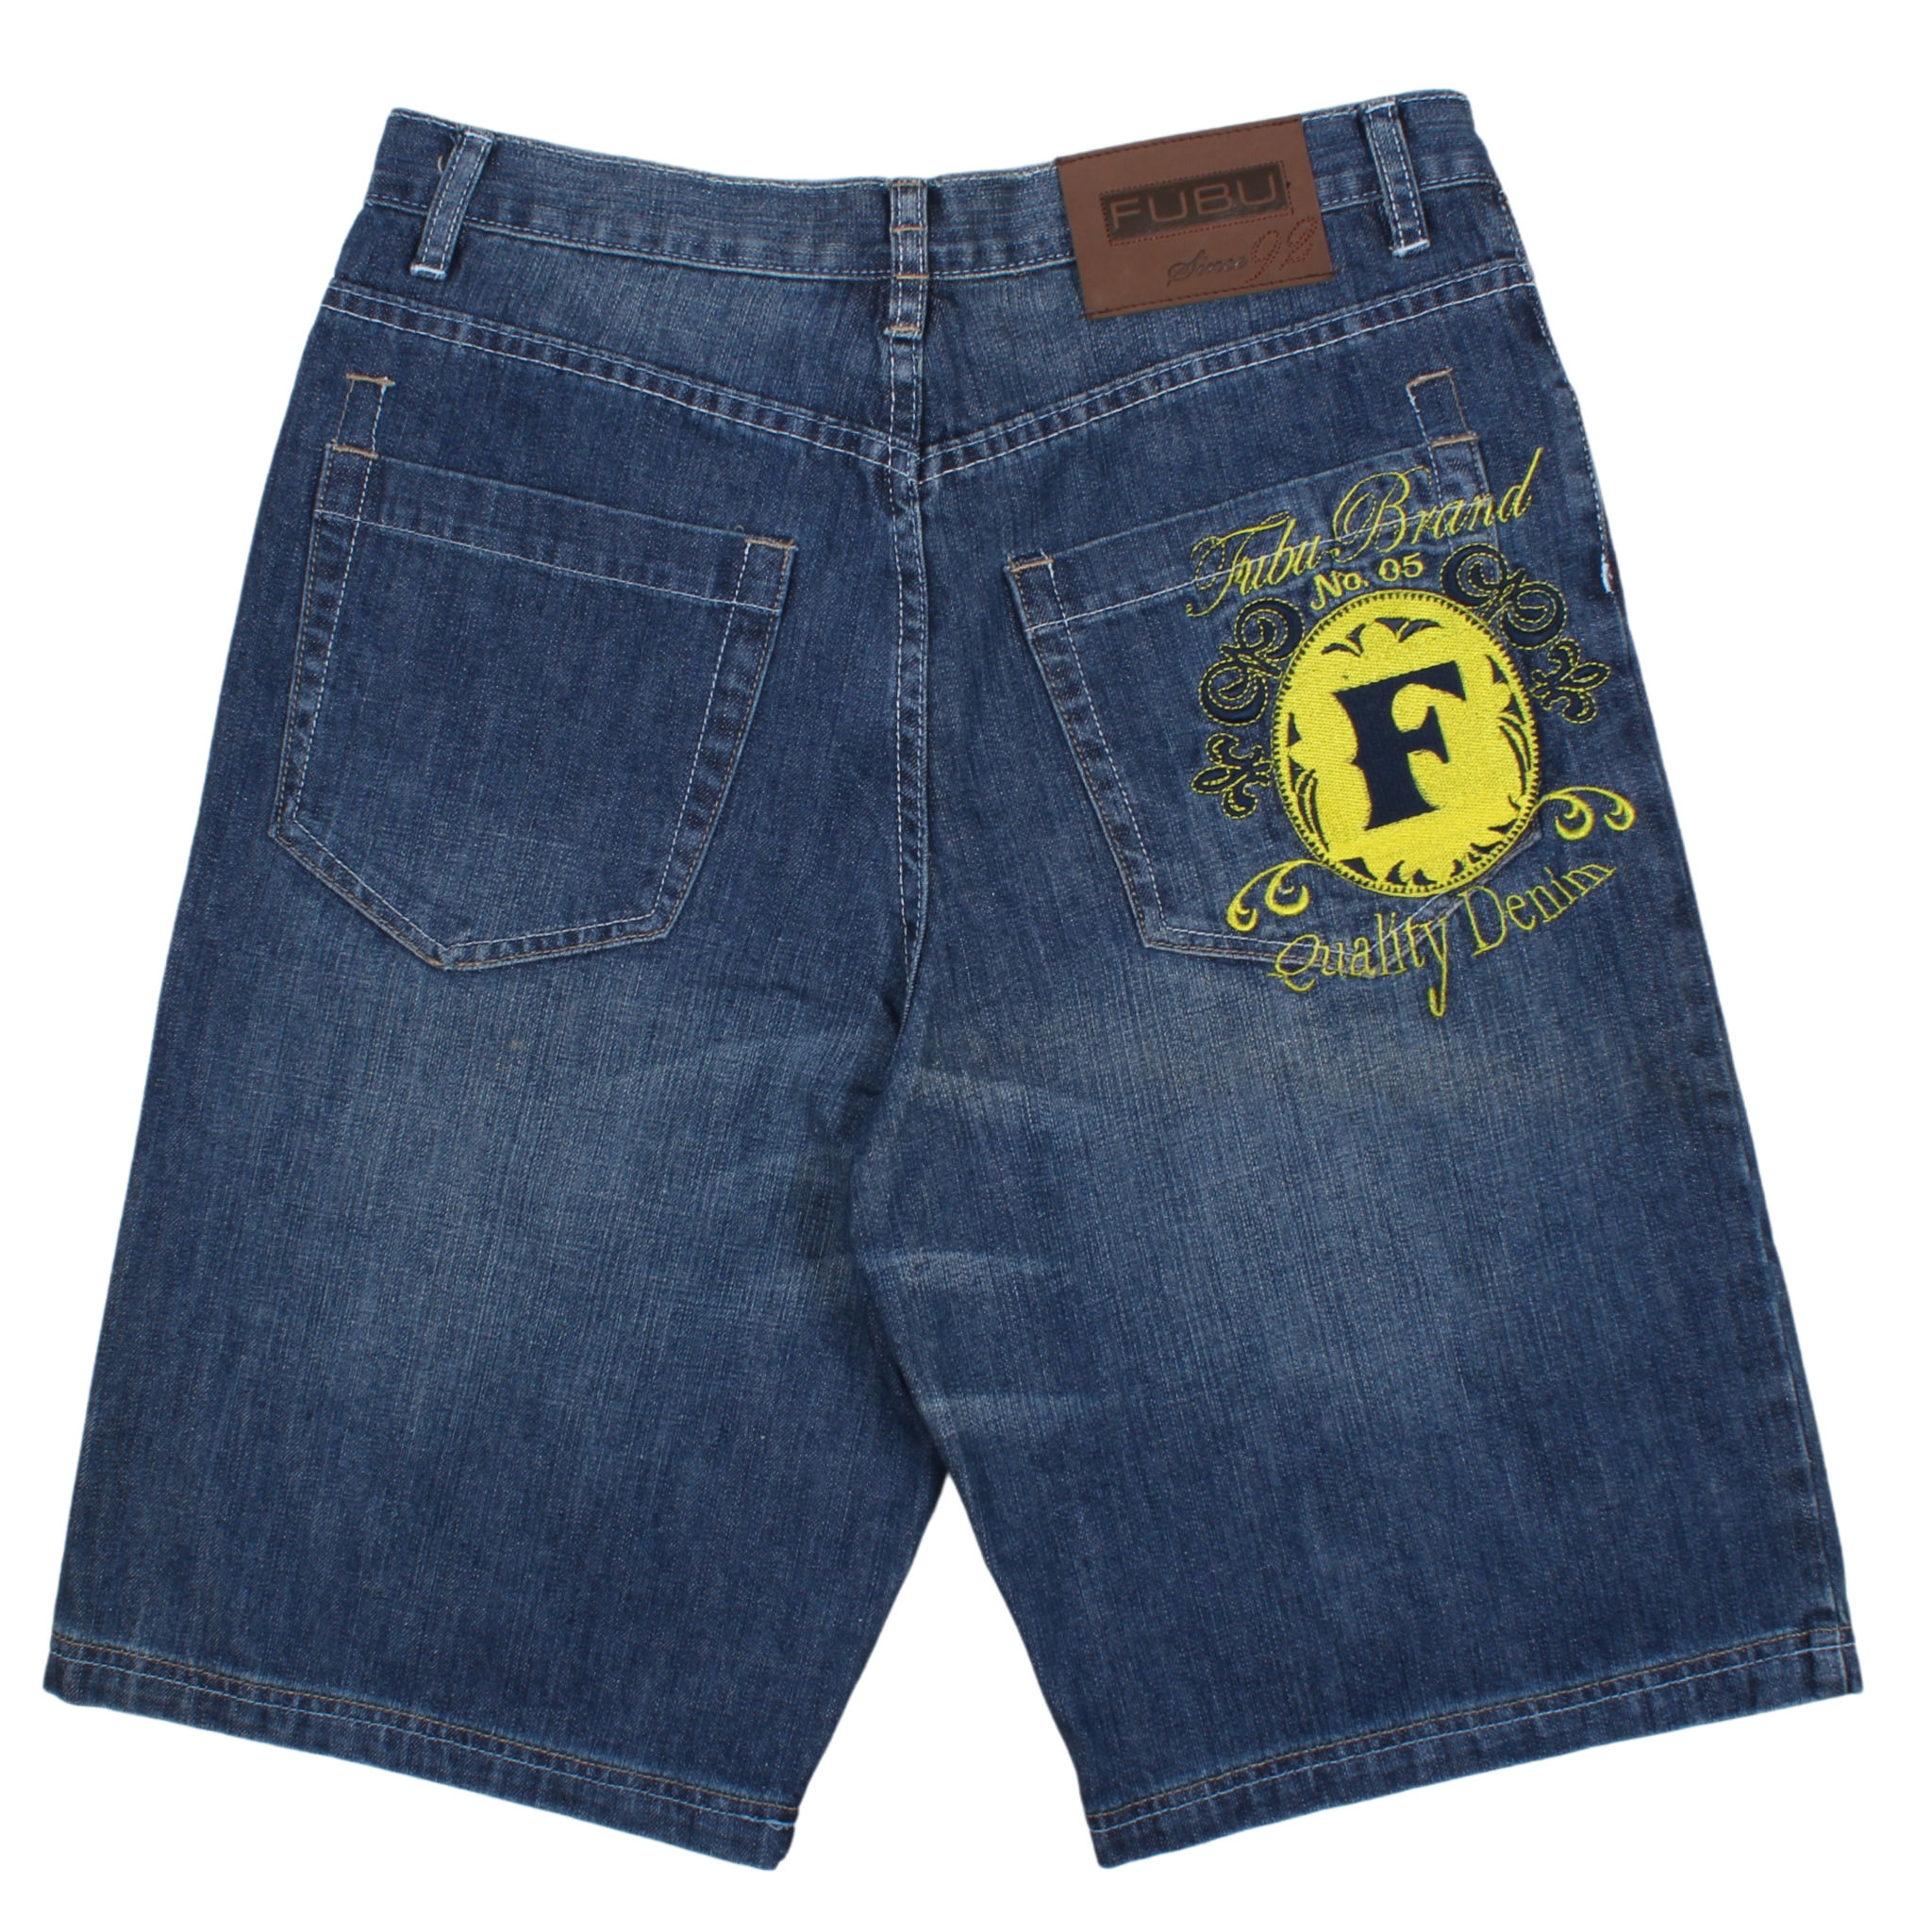 Vintage Fubu Denim Shorts (32